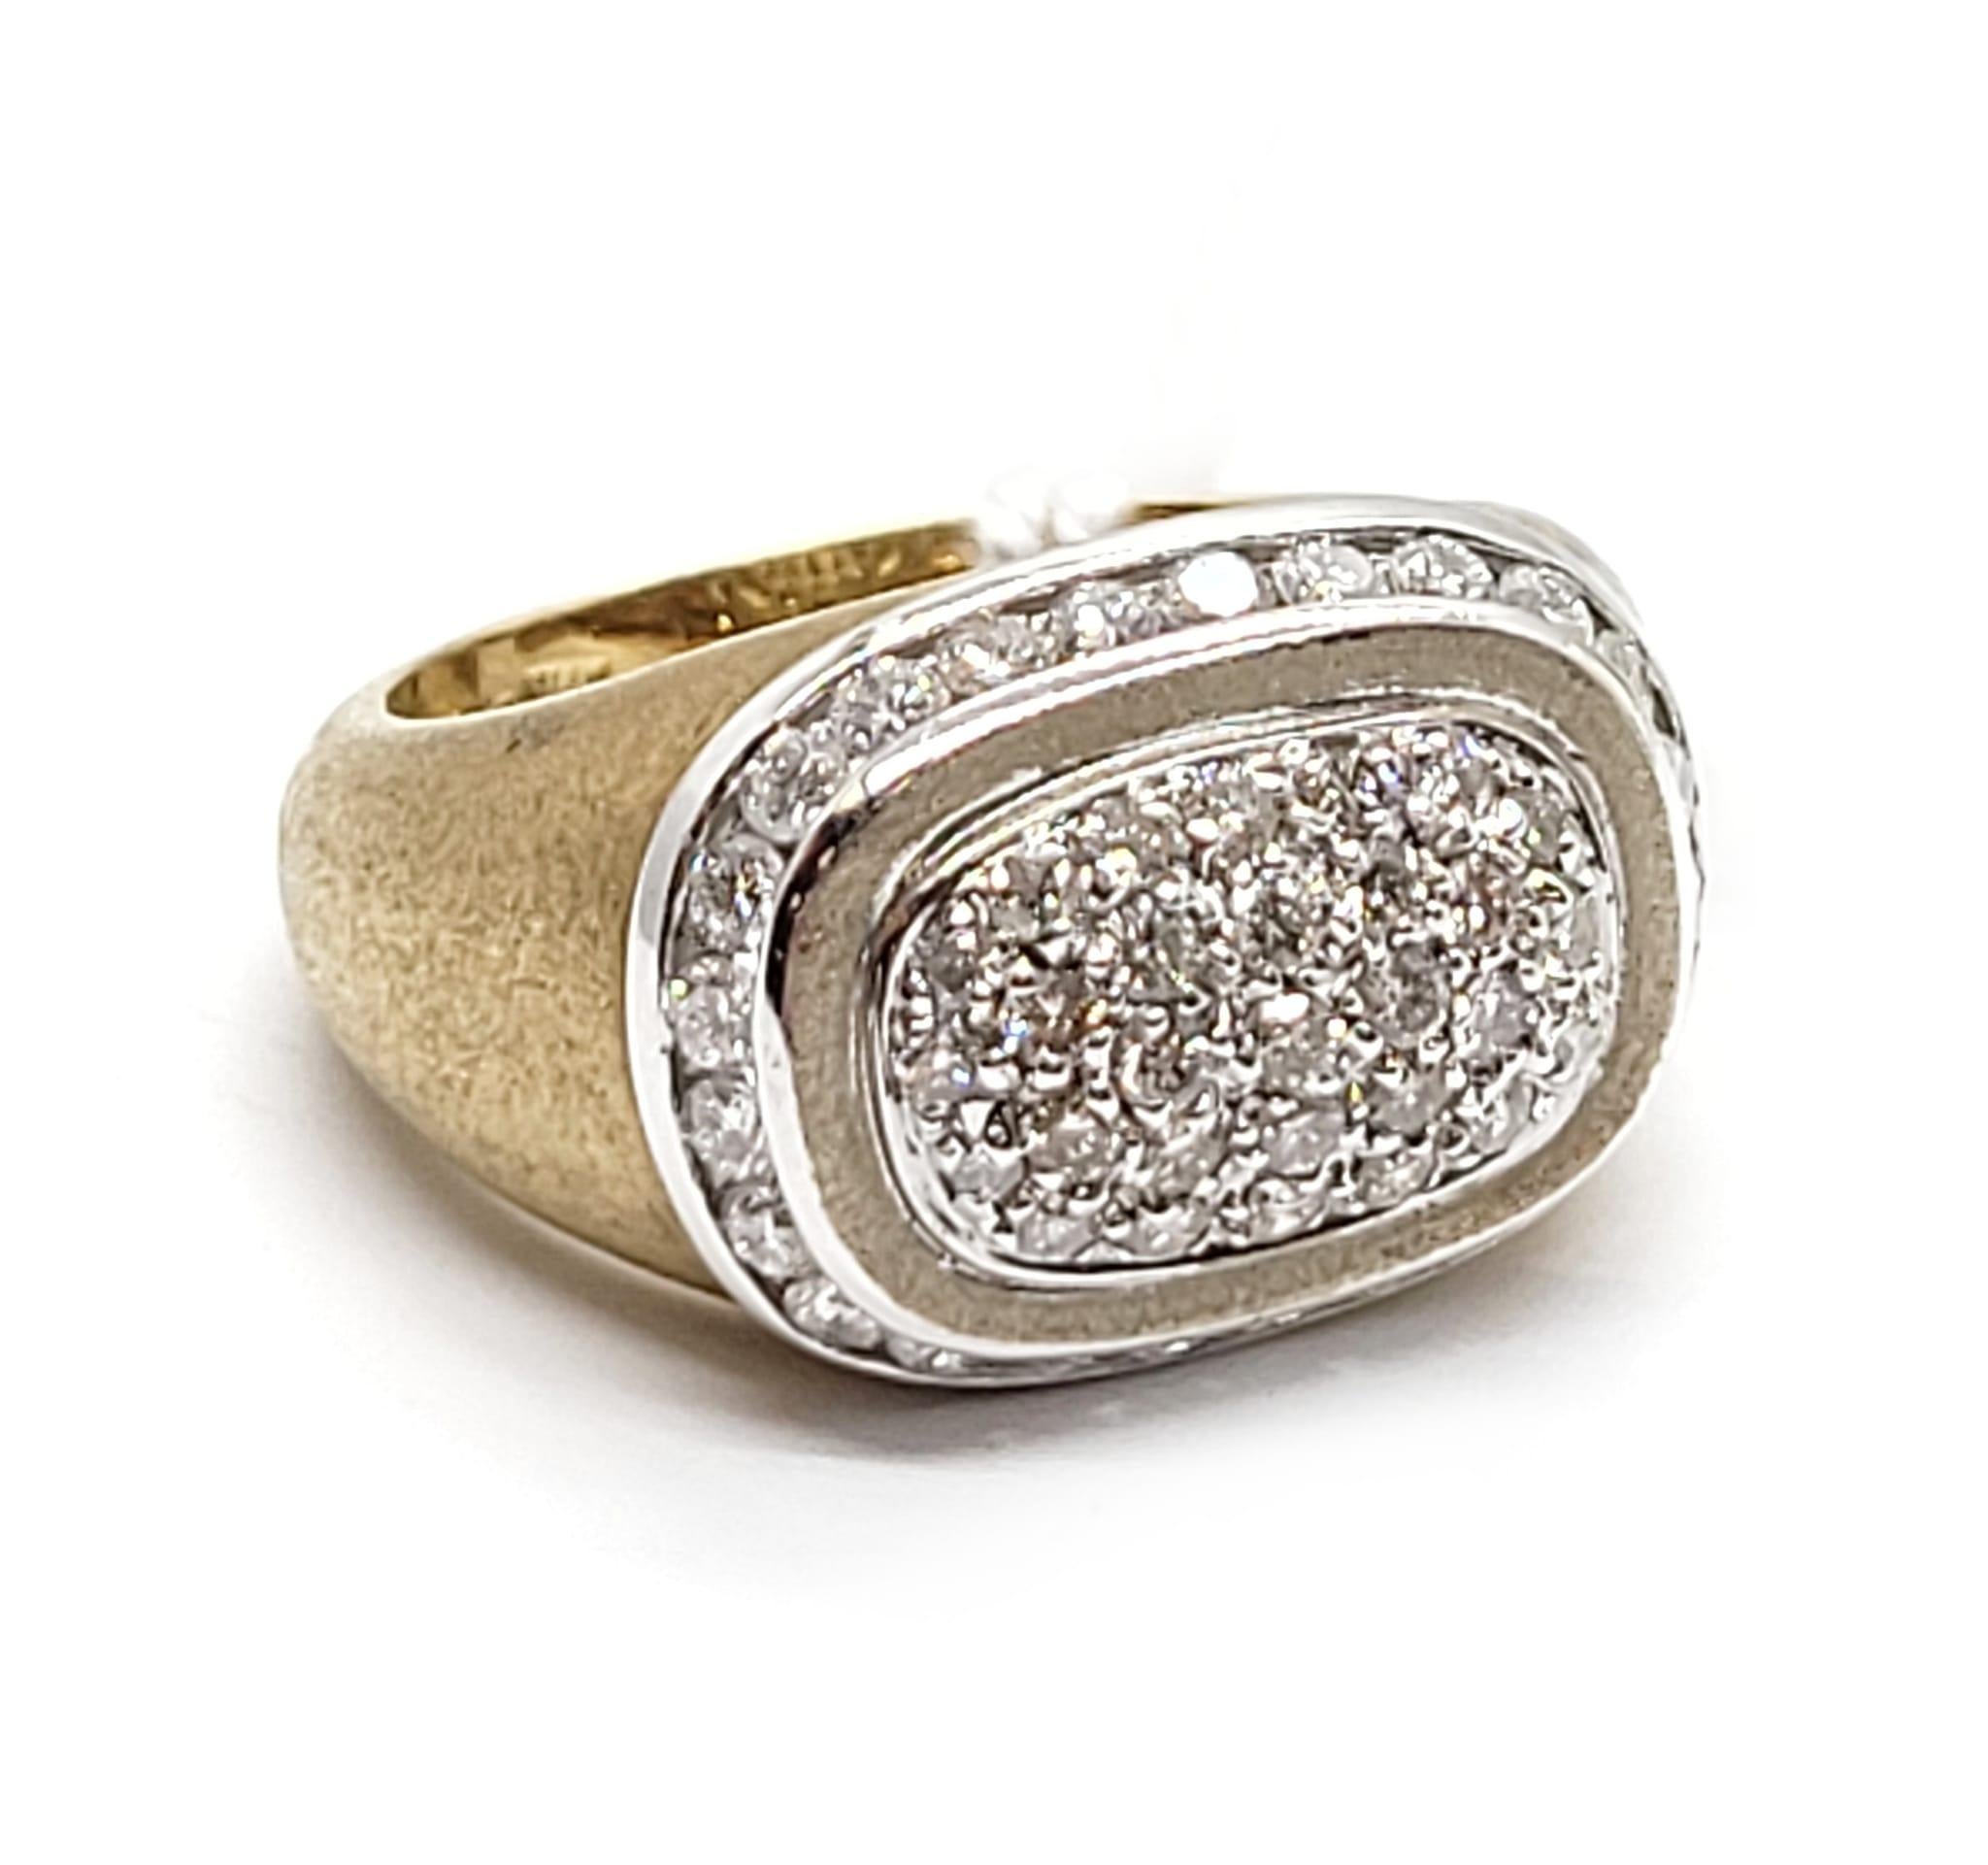 Andreoli 0.82 Carat Diamond 18 Karat Gold Ring

This Ring Features:
- 0.82 Carat Diamond
- 9.83 g 18k White & Rose Gold
- Made In Italy